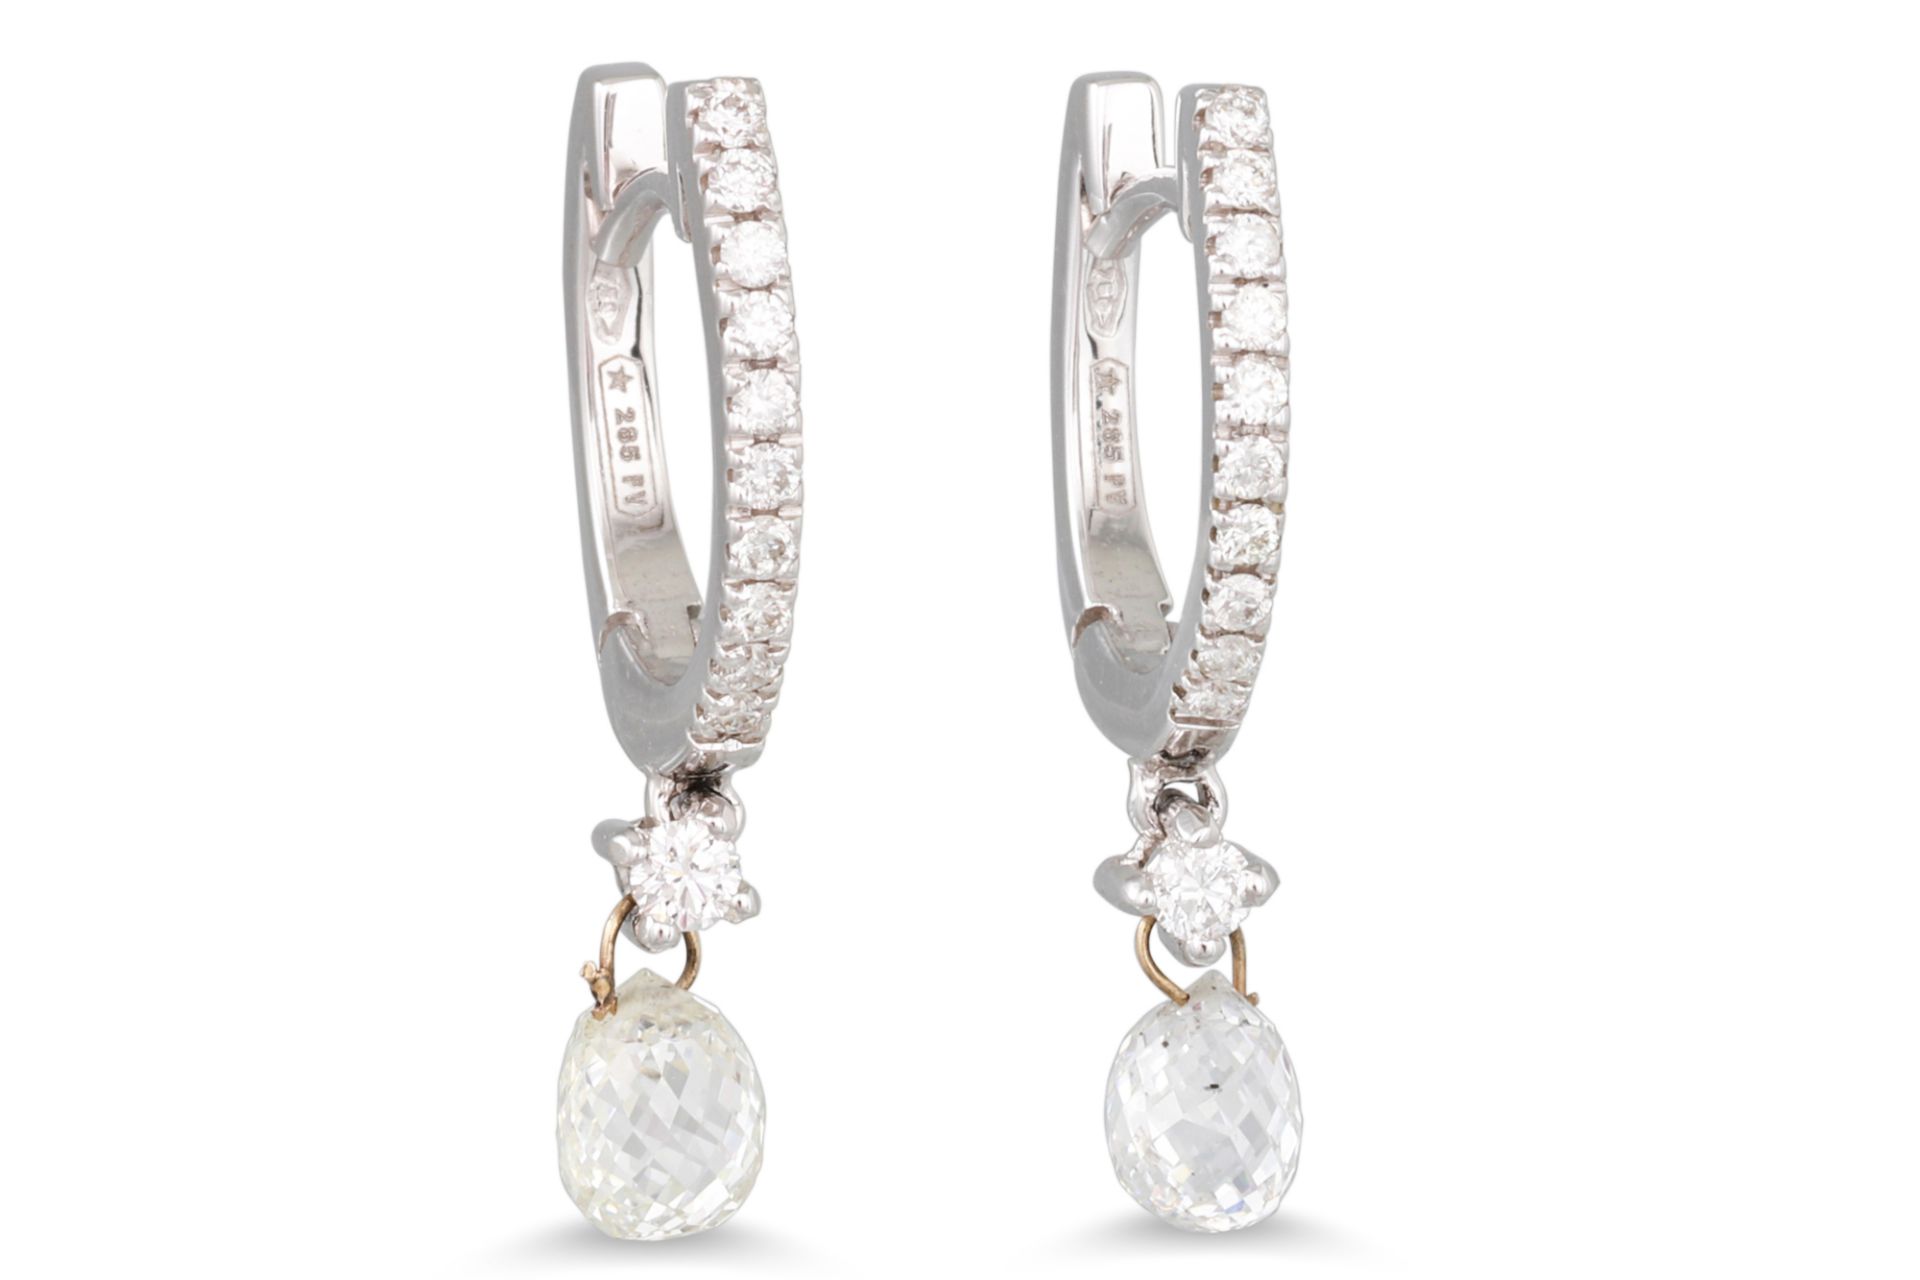 A PAIR OF DIAMOND DROP EARRINGS, the diamond hoops suspending diamond briolette drops, mounted in